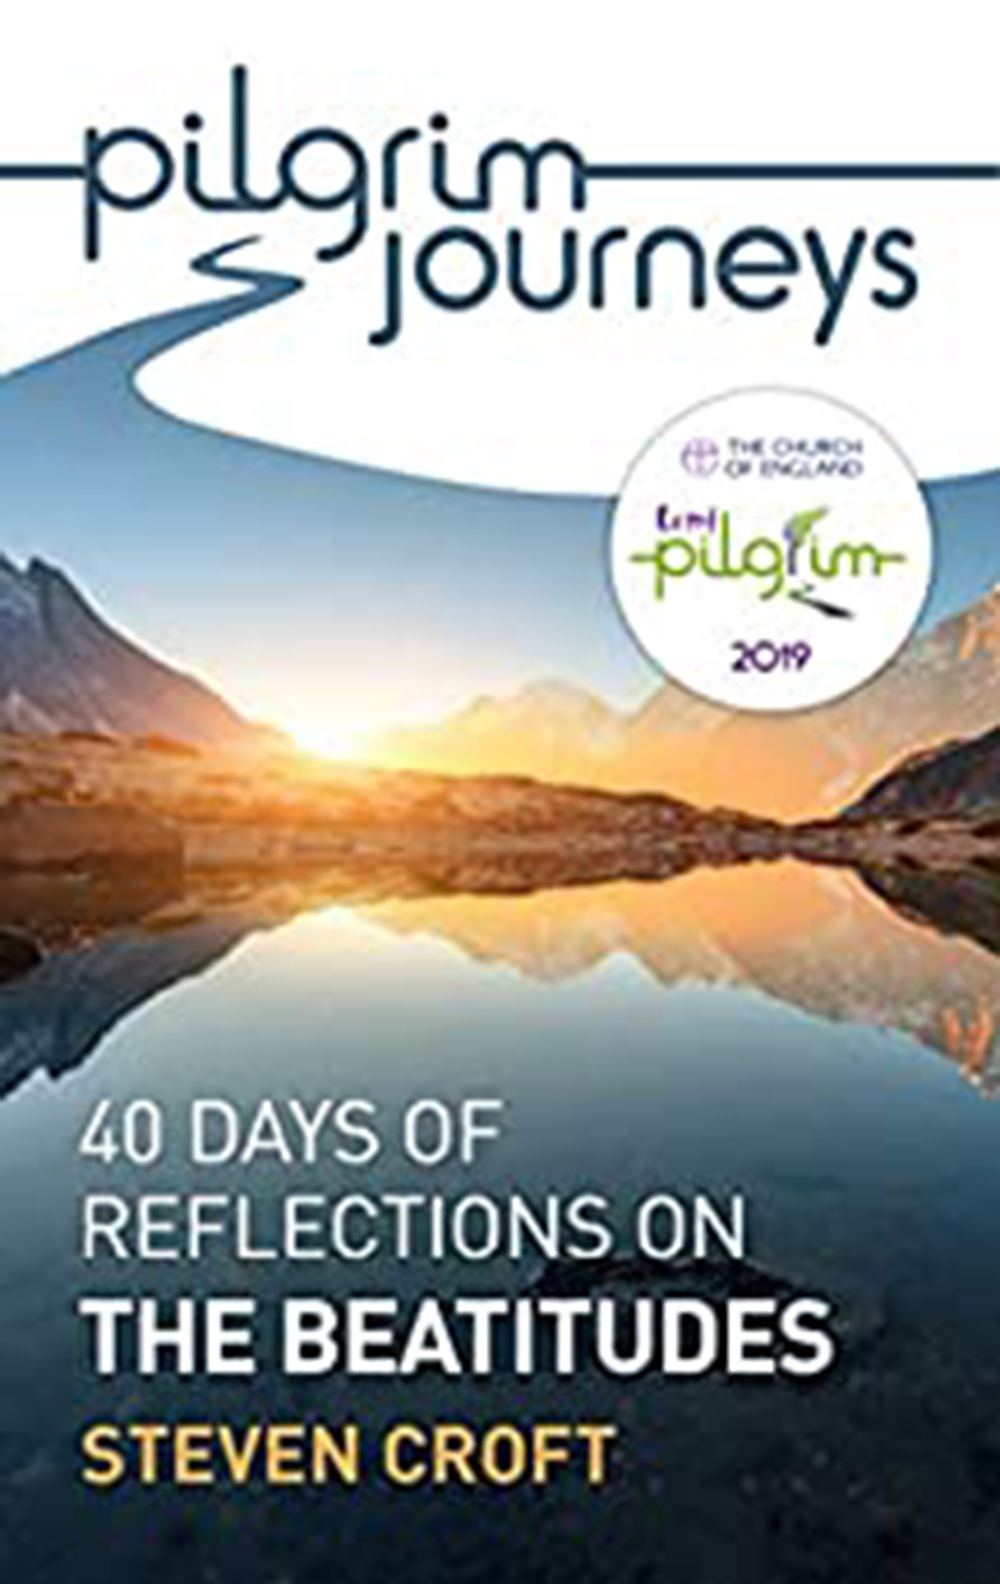 Pilgrim journeys – 40 days of reflections on the Beatitudes 